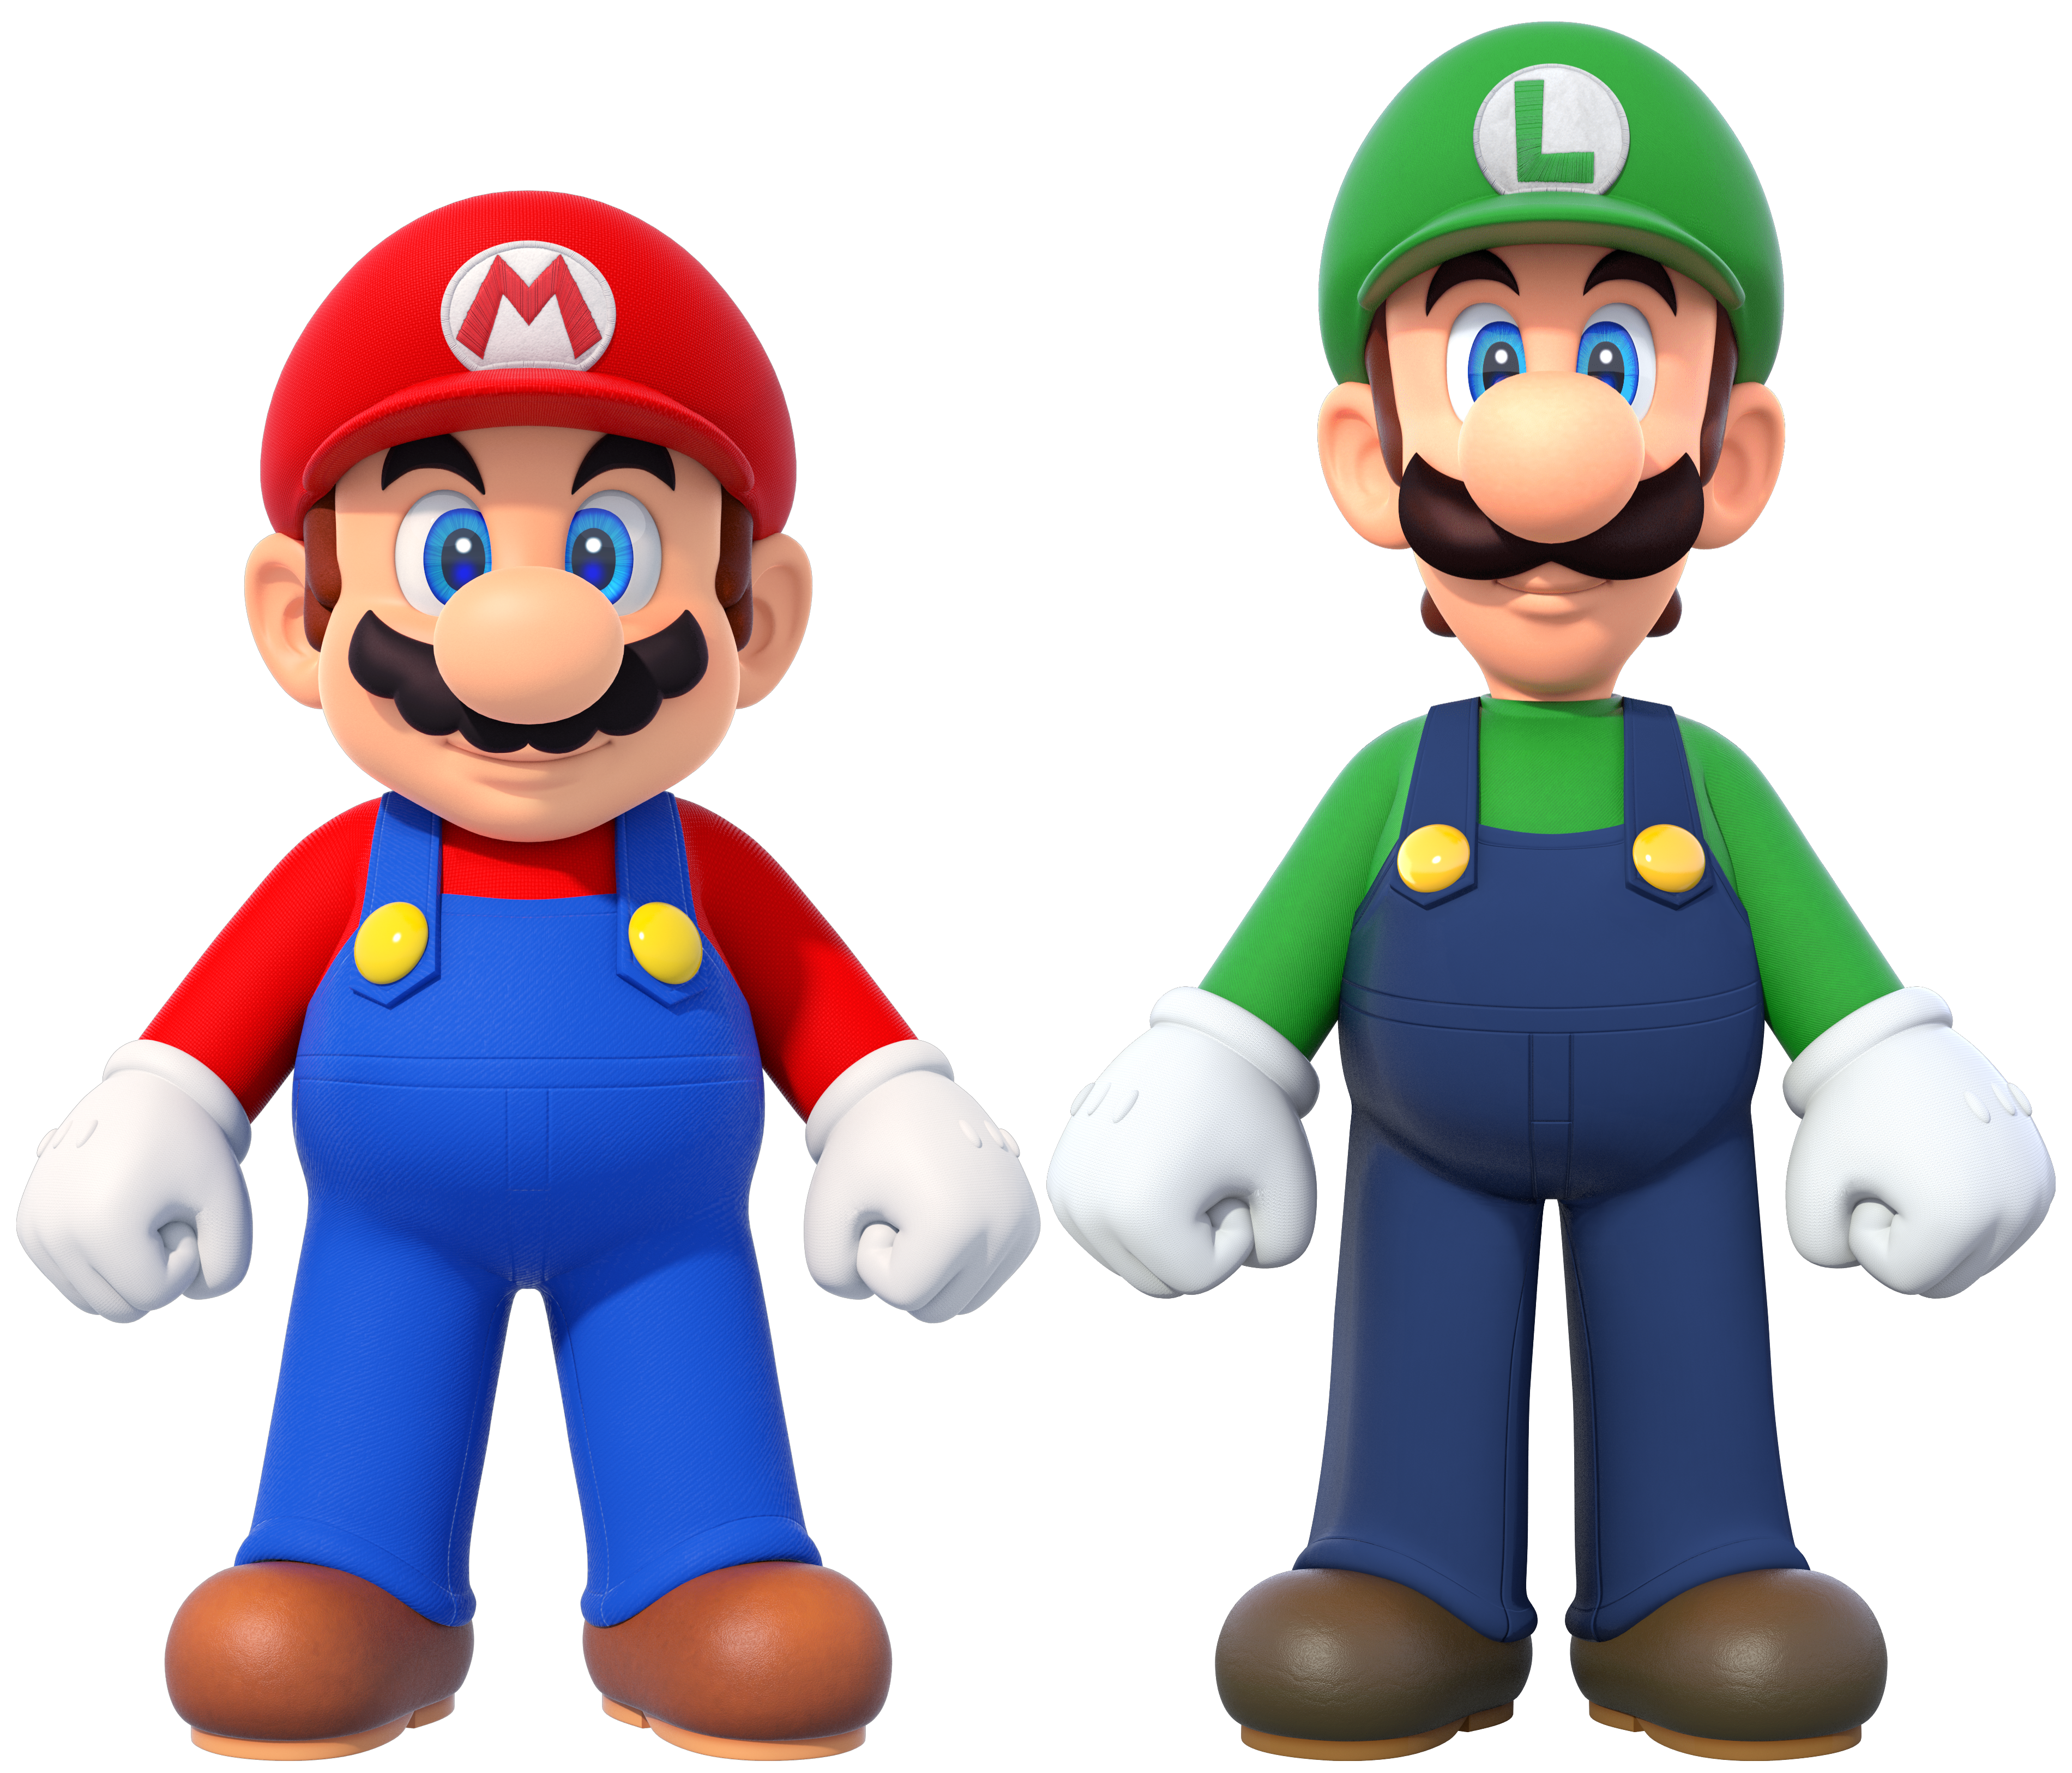 Mario and Luigi by USANintendo on DeviantArt